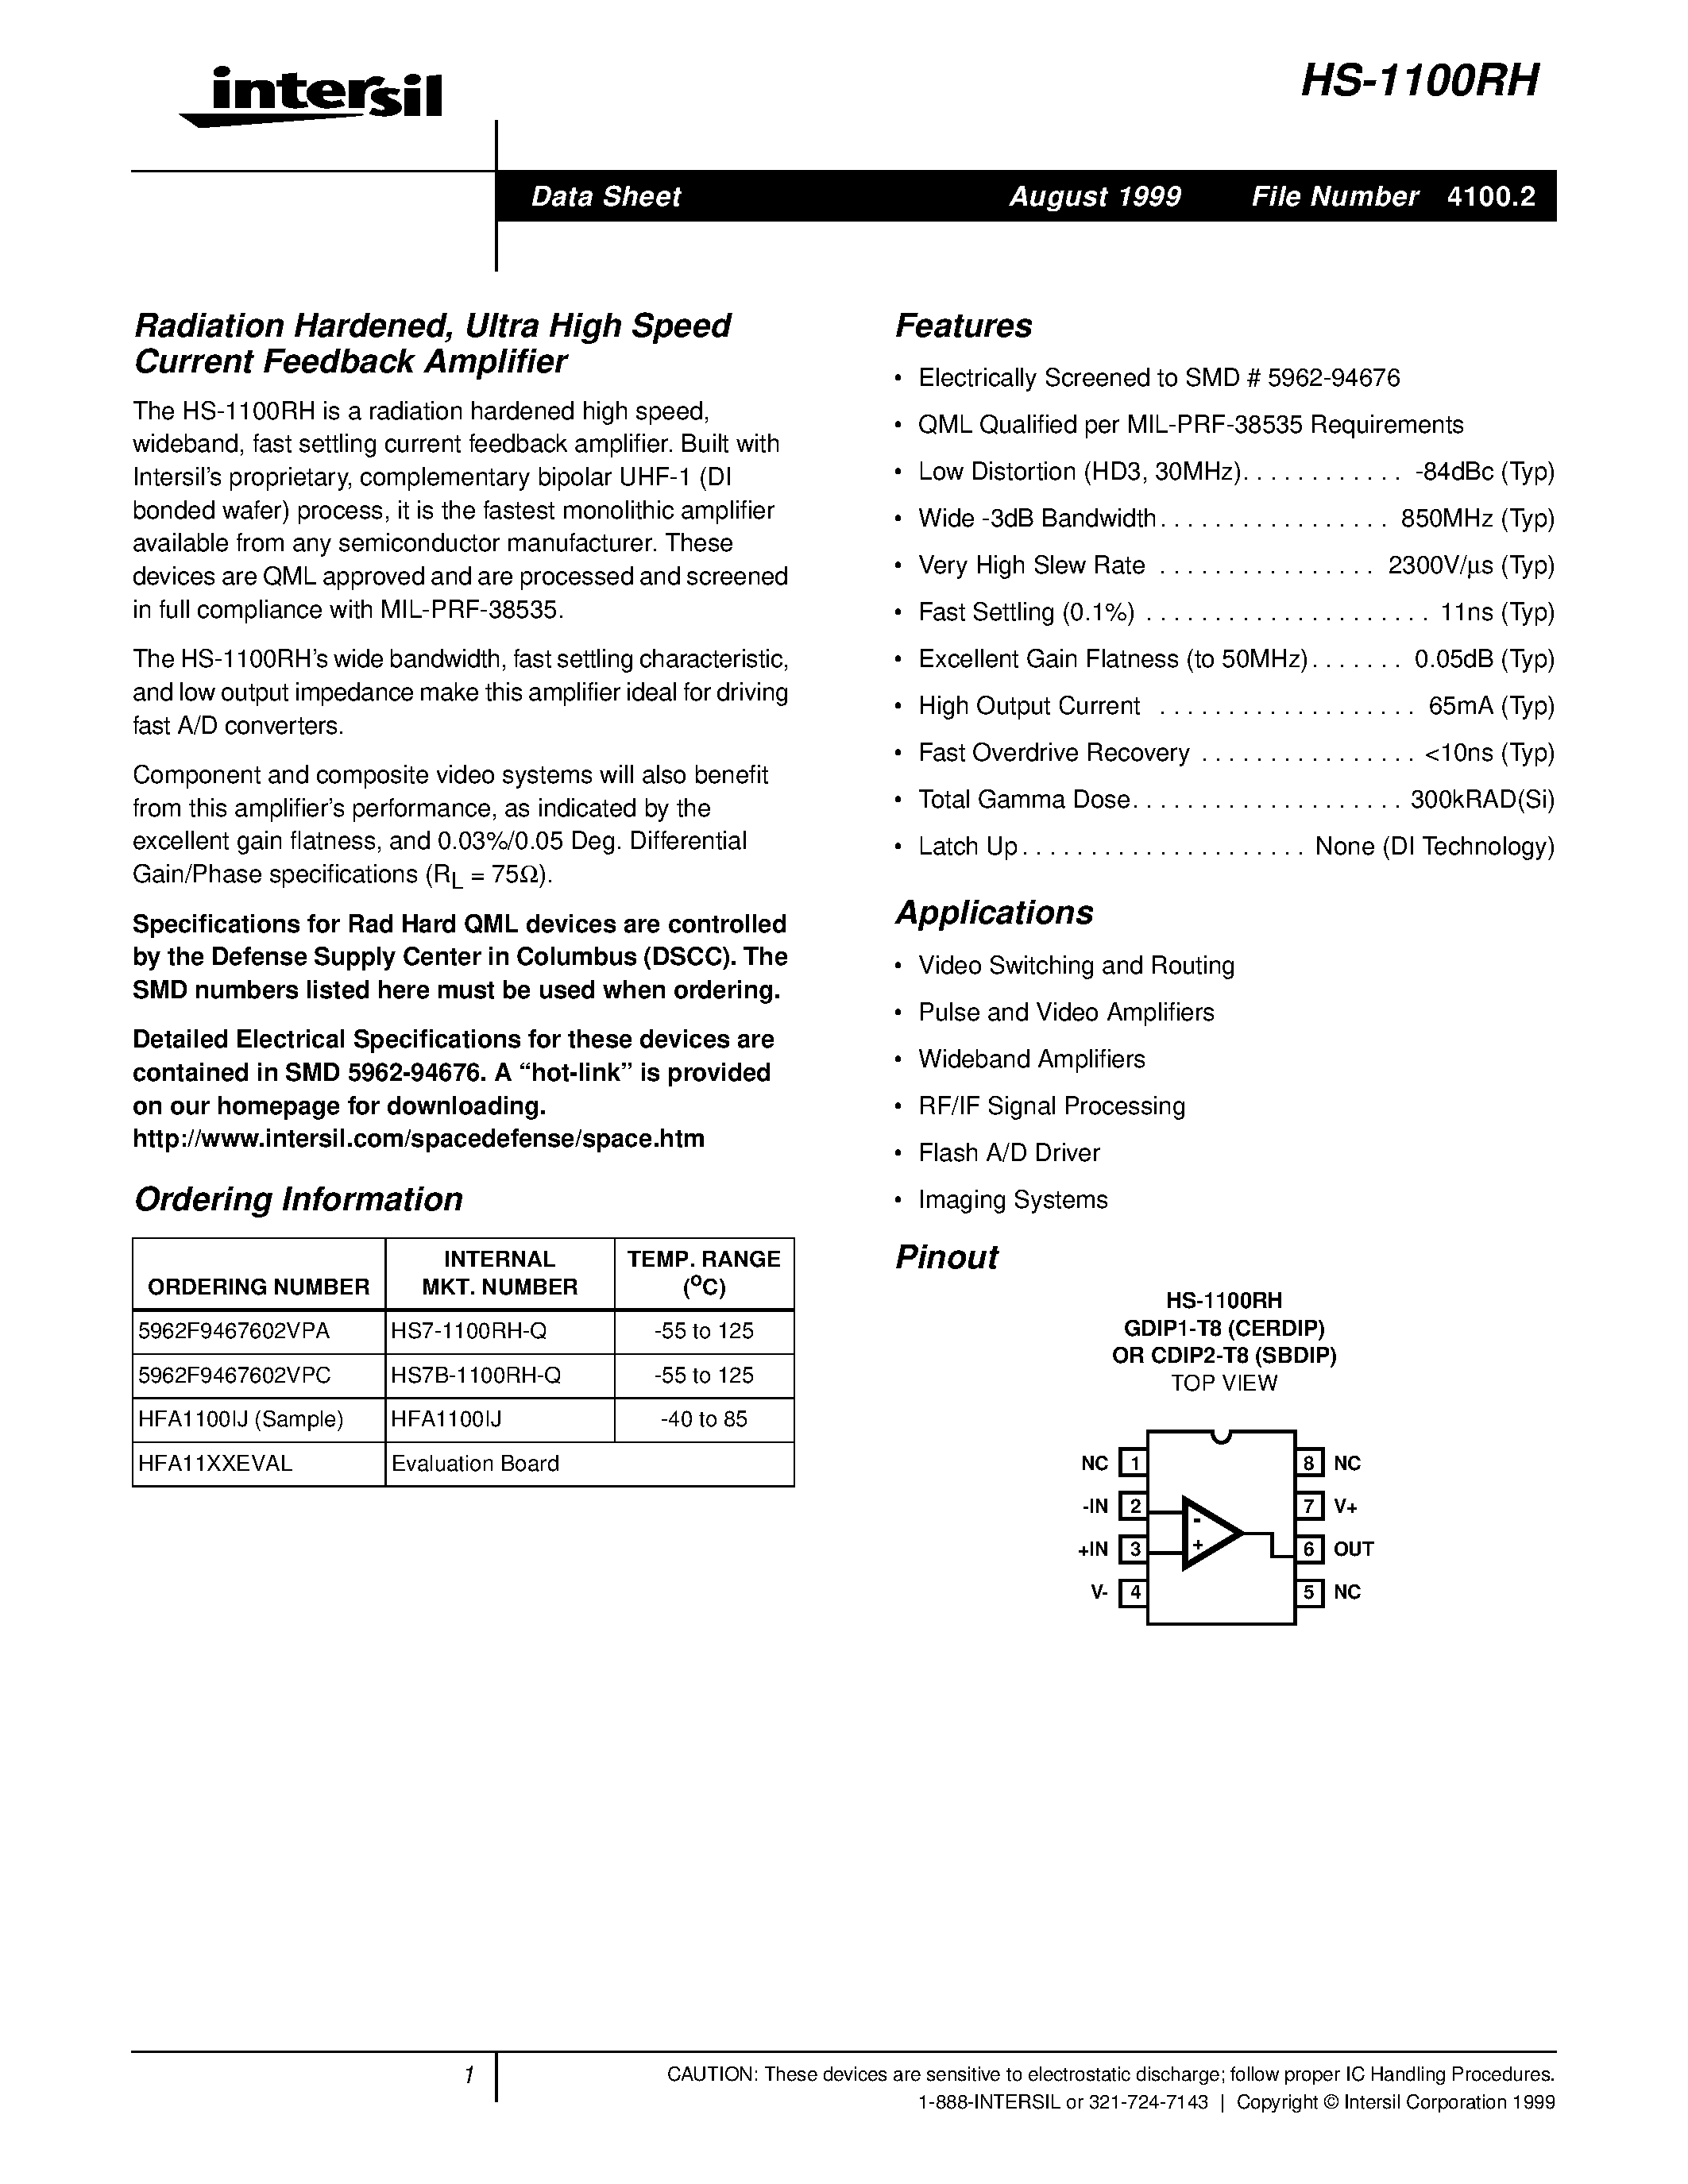 Datasheet HS7-1100RH-Q - Radiation Hardened/ Ultra High Speed Current Feedback Amplifier page 1